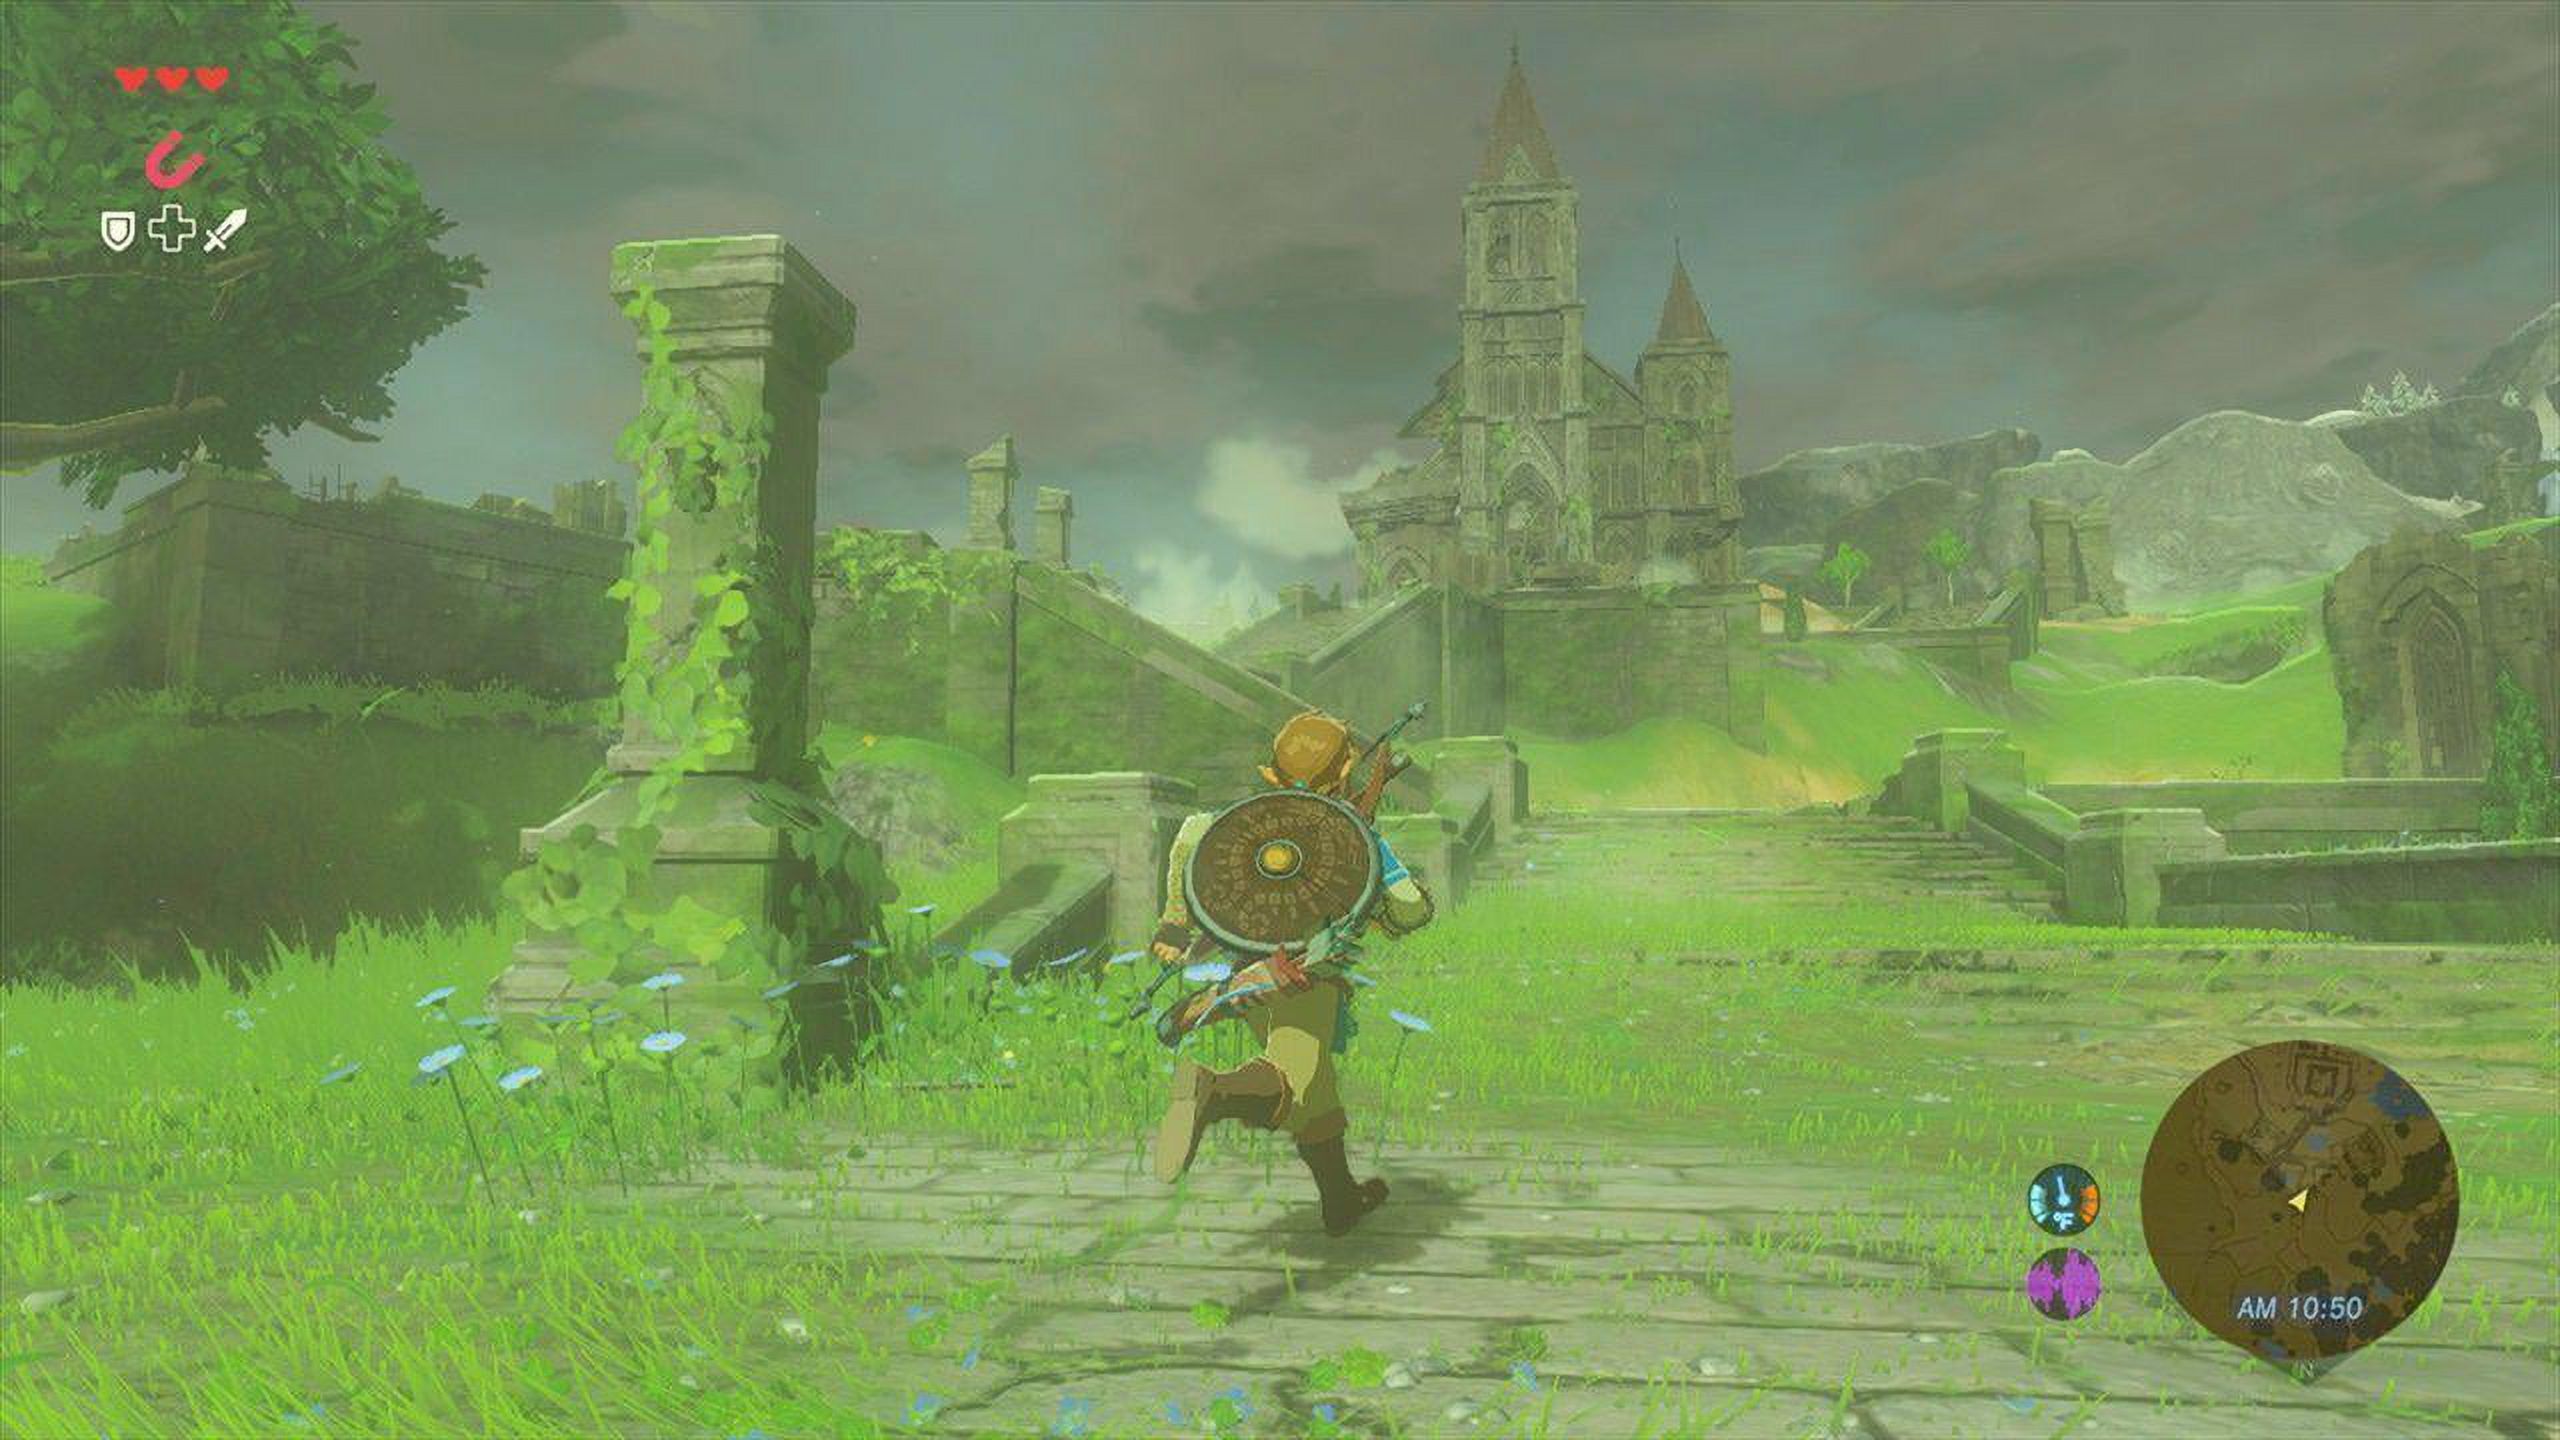 The Legend of Zelda: Breath of the Wild - Nintendo Switch - image 6 of 17